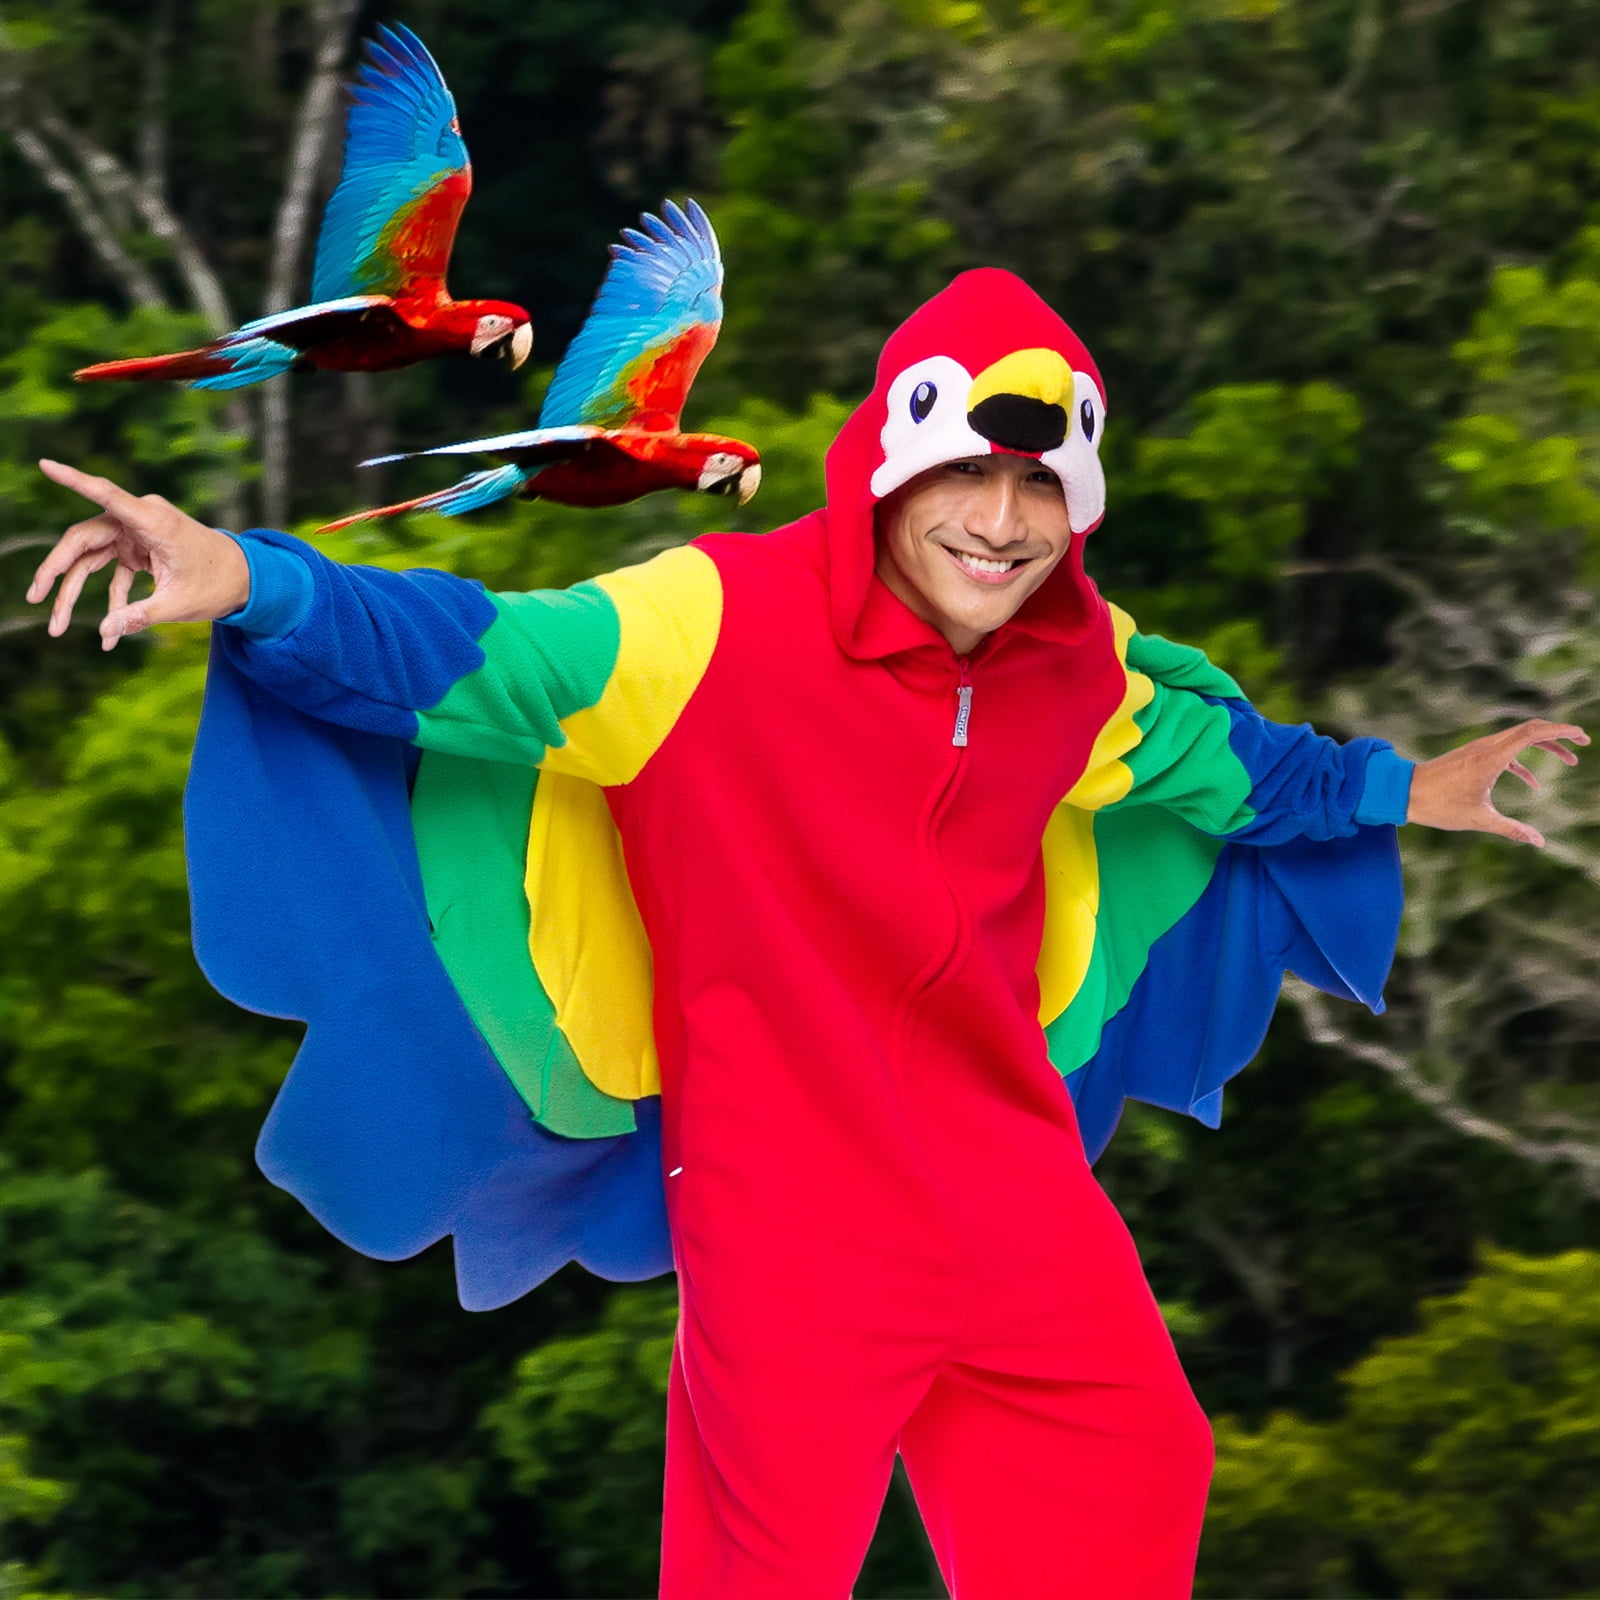 Parrot One Piece - Plush Adult Bird Animal Costume Jumpsuit by FUNZIEZ! (Red, Large) - Walmart.com